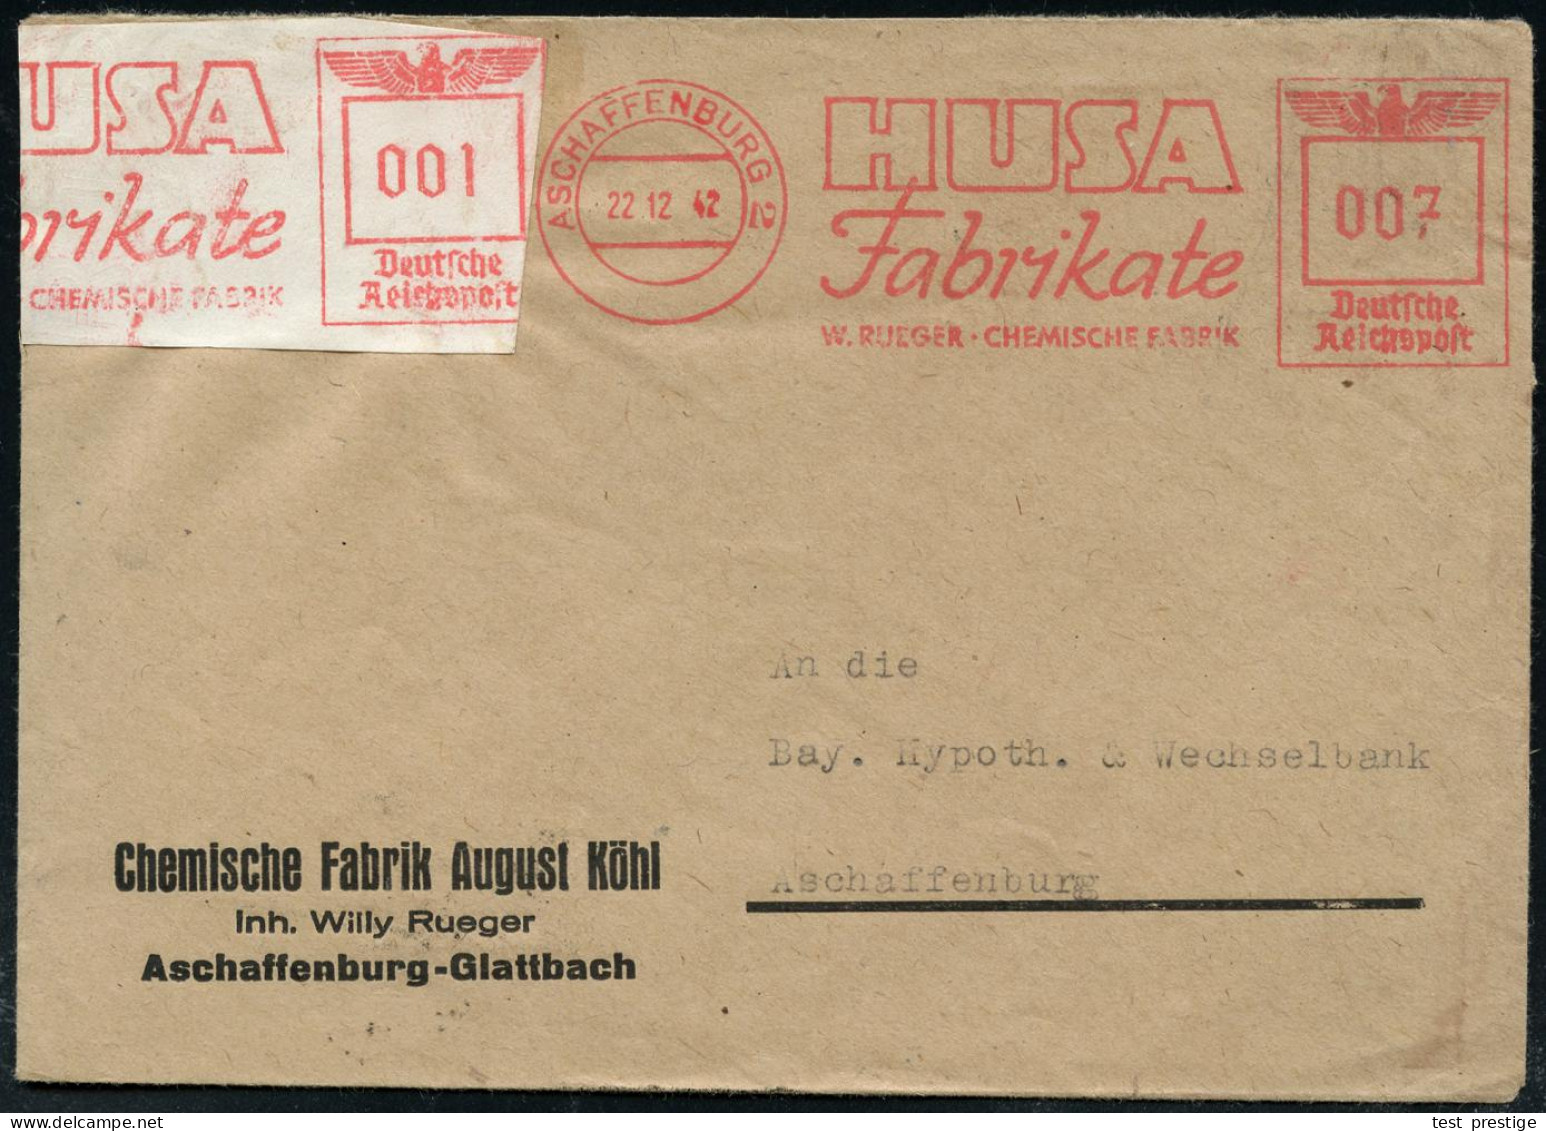 ASCHAFFENBURG 2/ HUSA/ Fabrikate/ W.RUEGER-CHEMISCHE FABRIK 1942 (22.12.) AFS Francotyp 007 Pf. + Aufkleber Mit AFS 001  - Chemistry